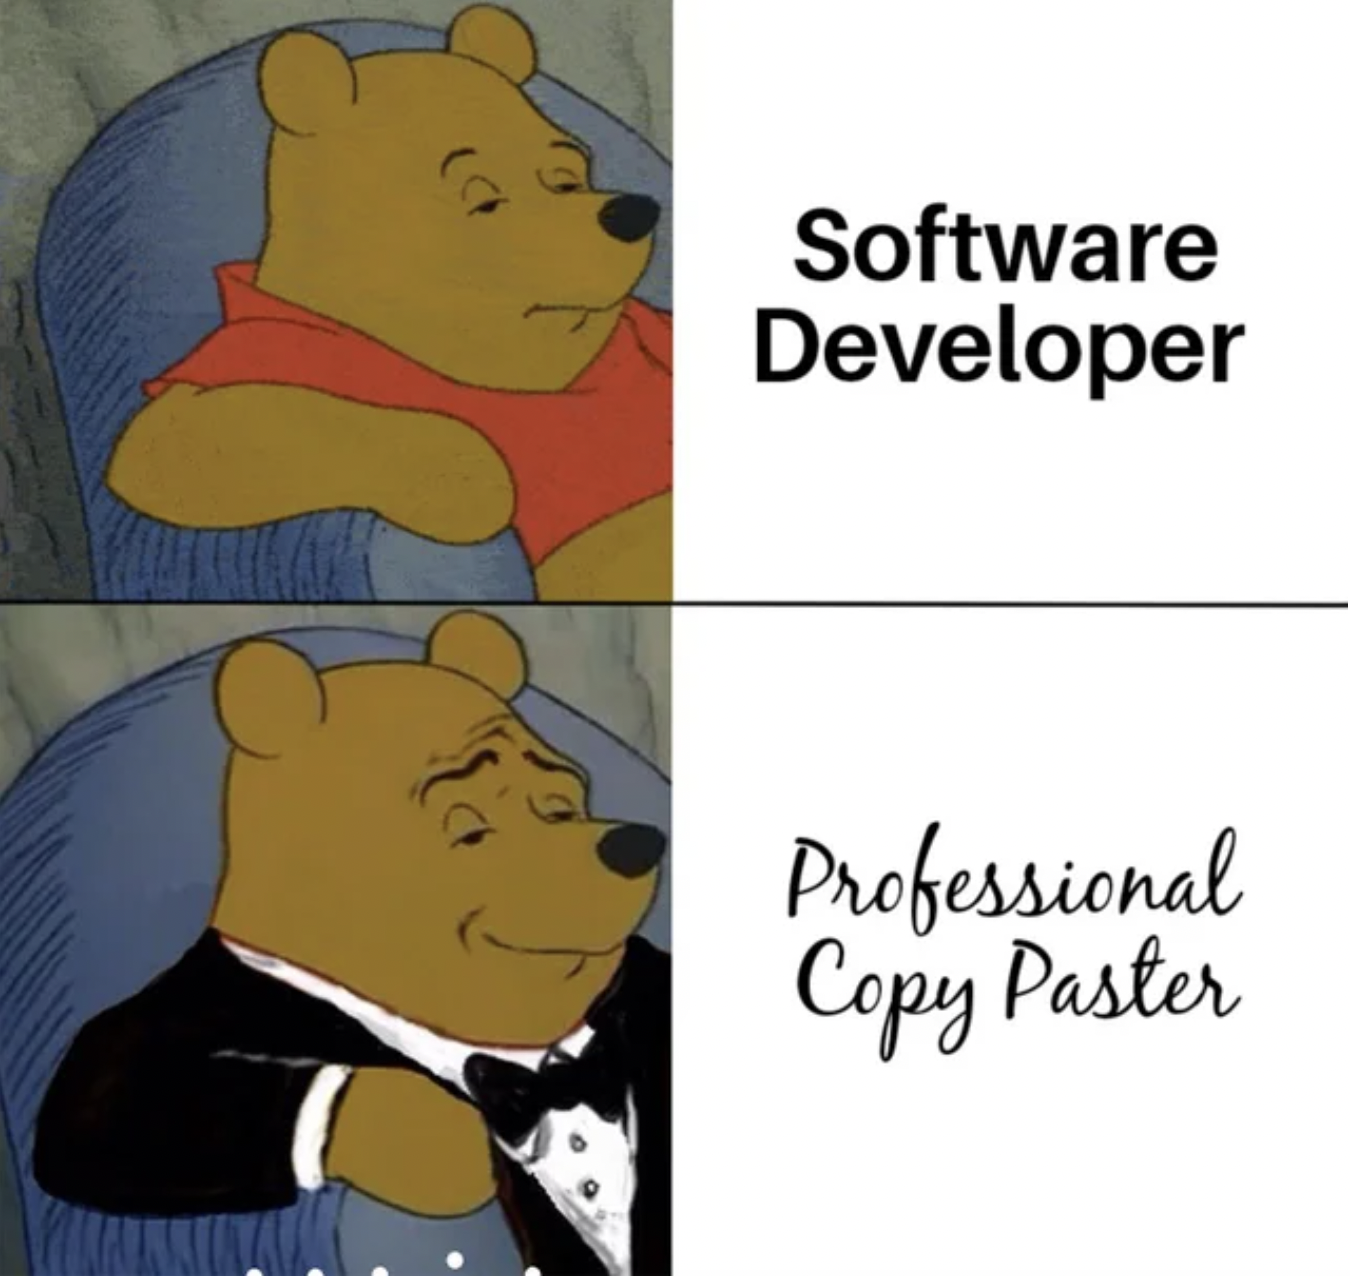 Dank Memes - pest control memes - Software Developer Professional Copy Paster